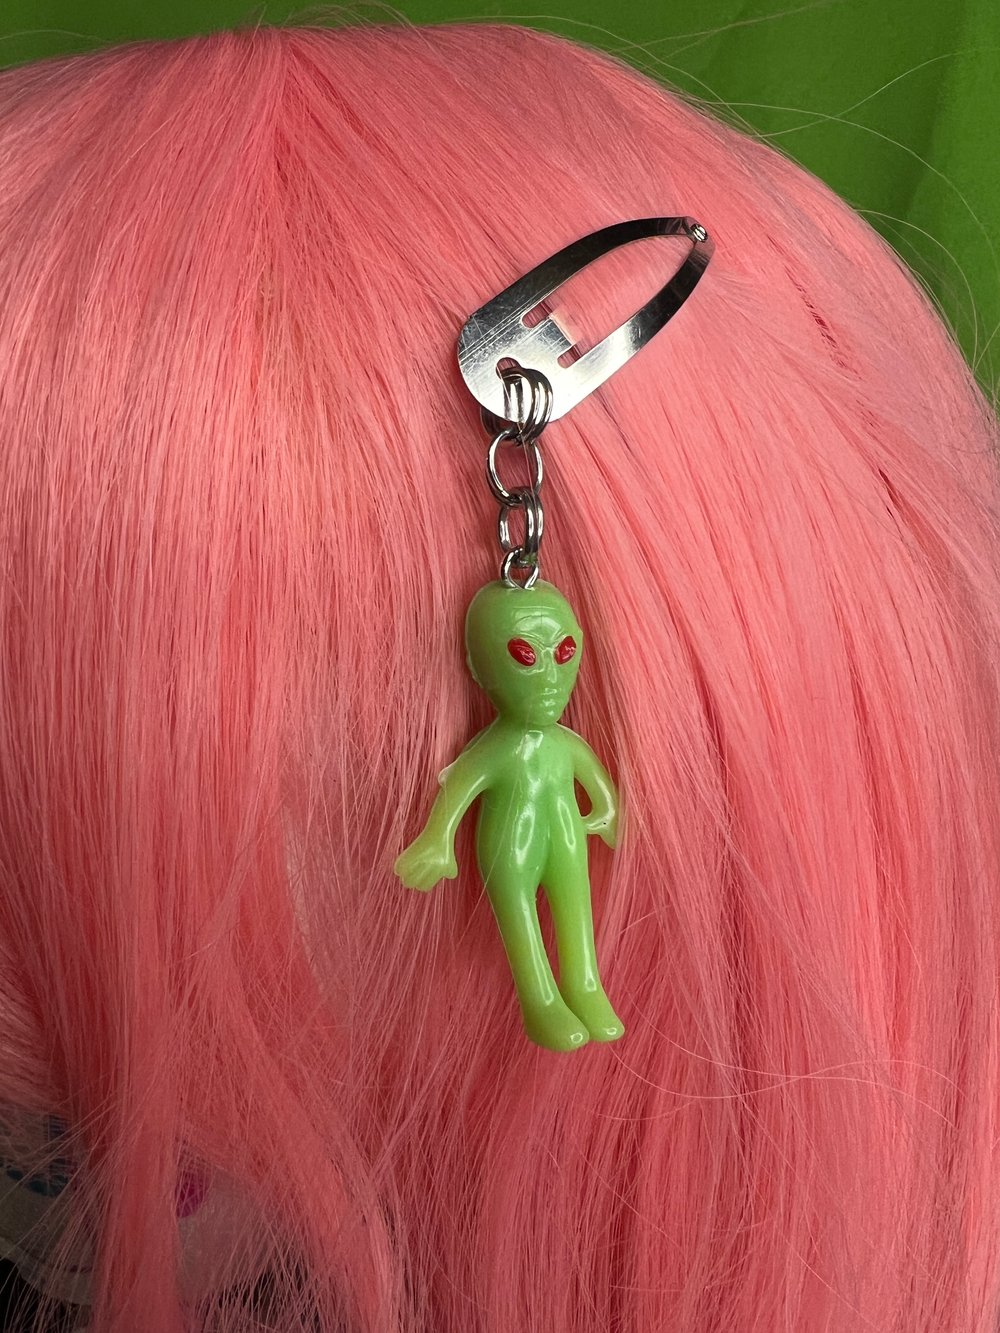 alien hair clips